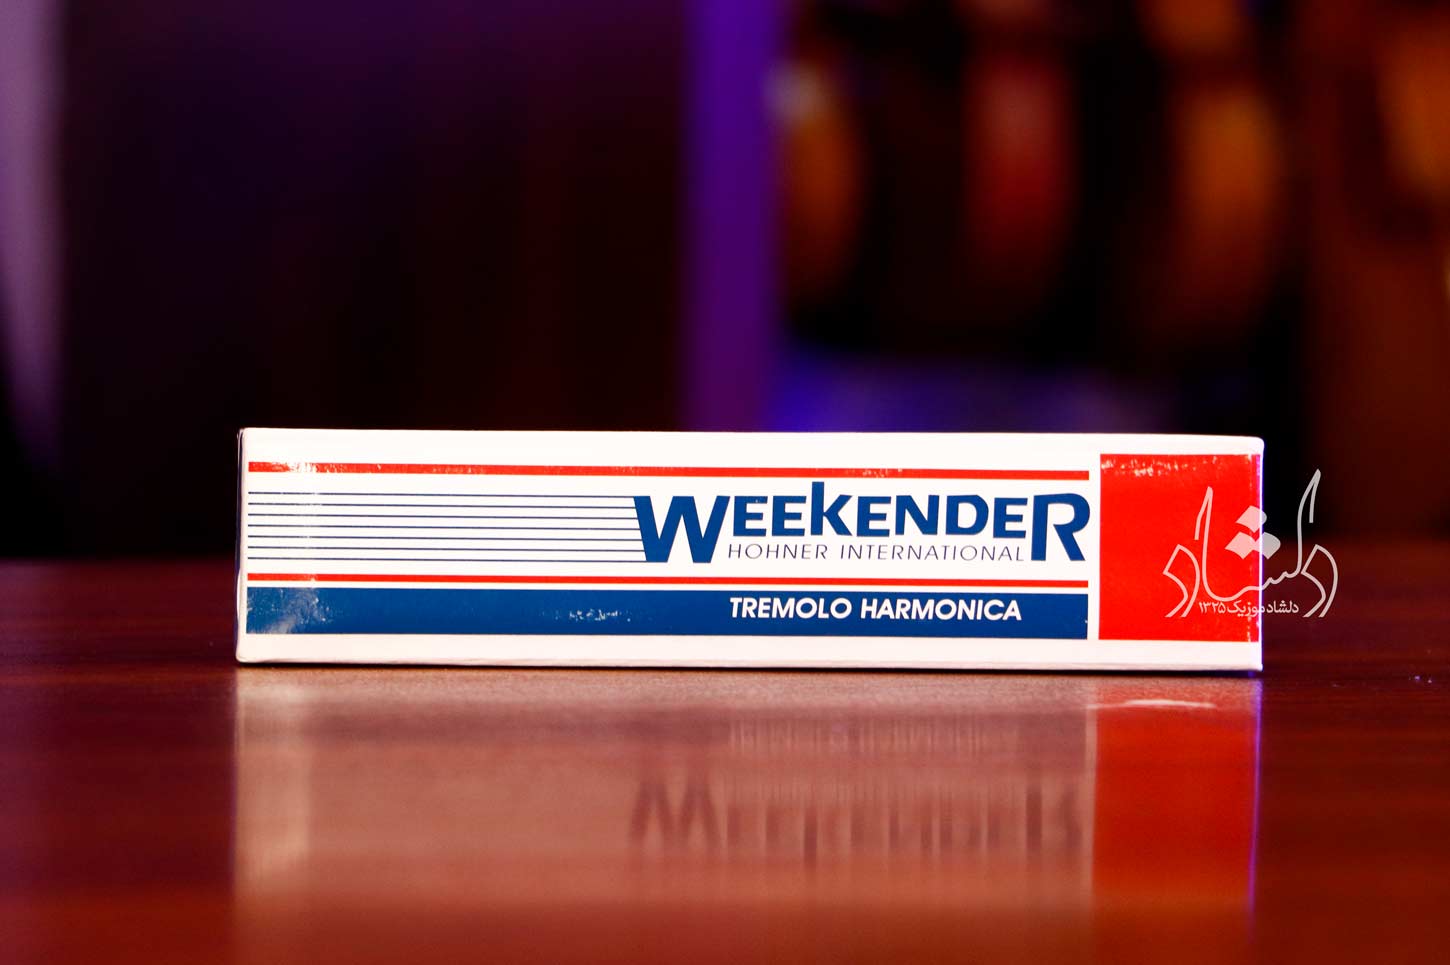 جعبه سازدهنی هوهنر مدل Weekender